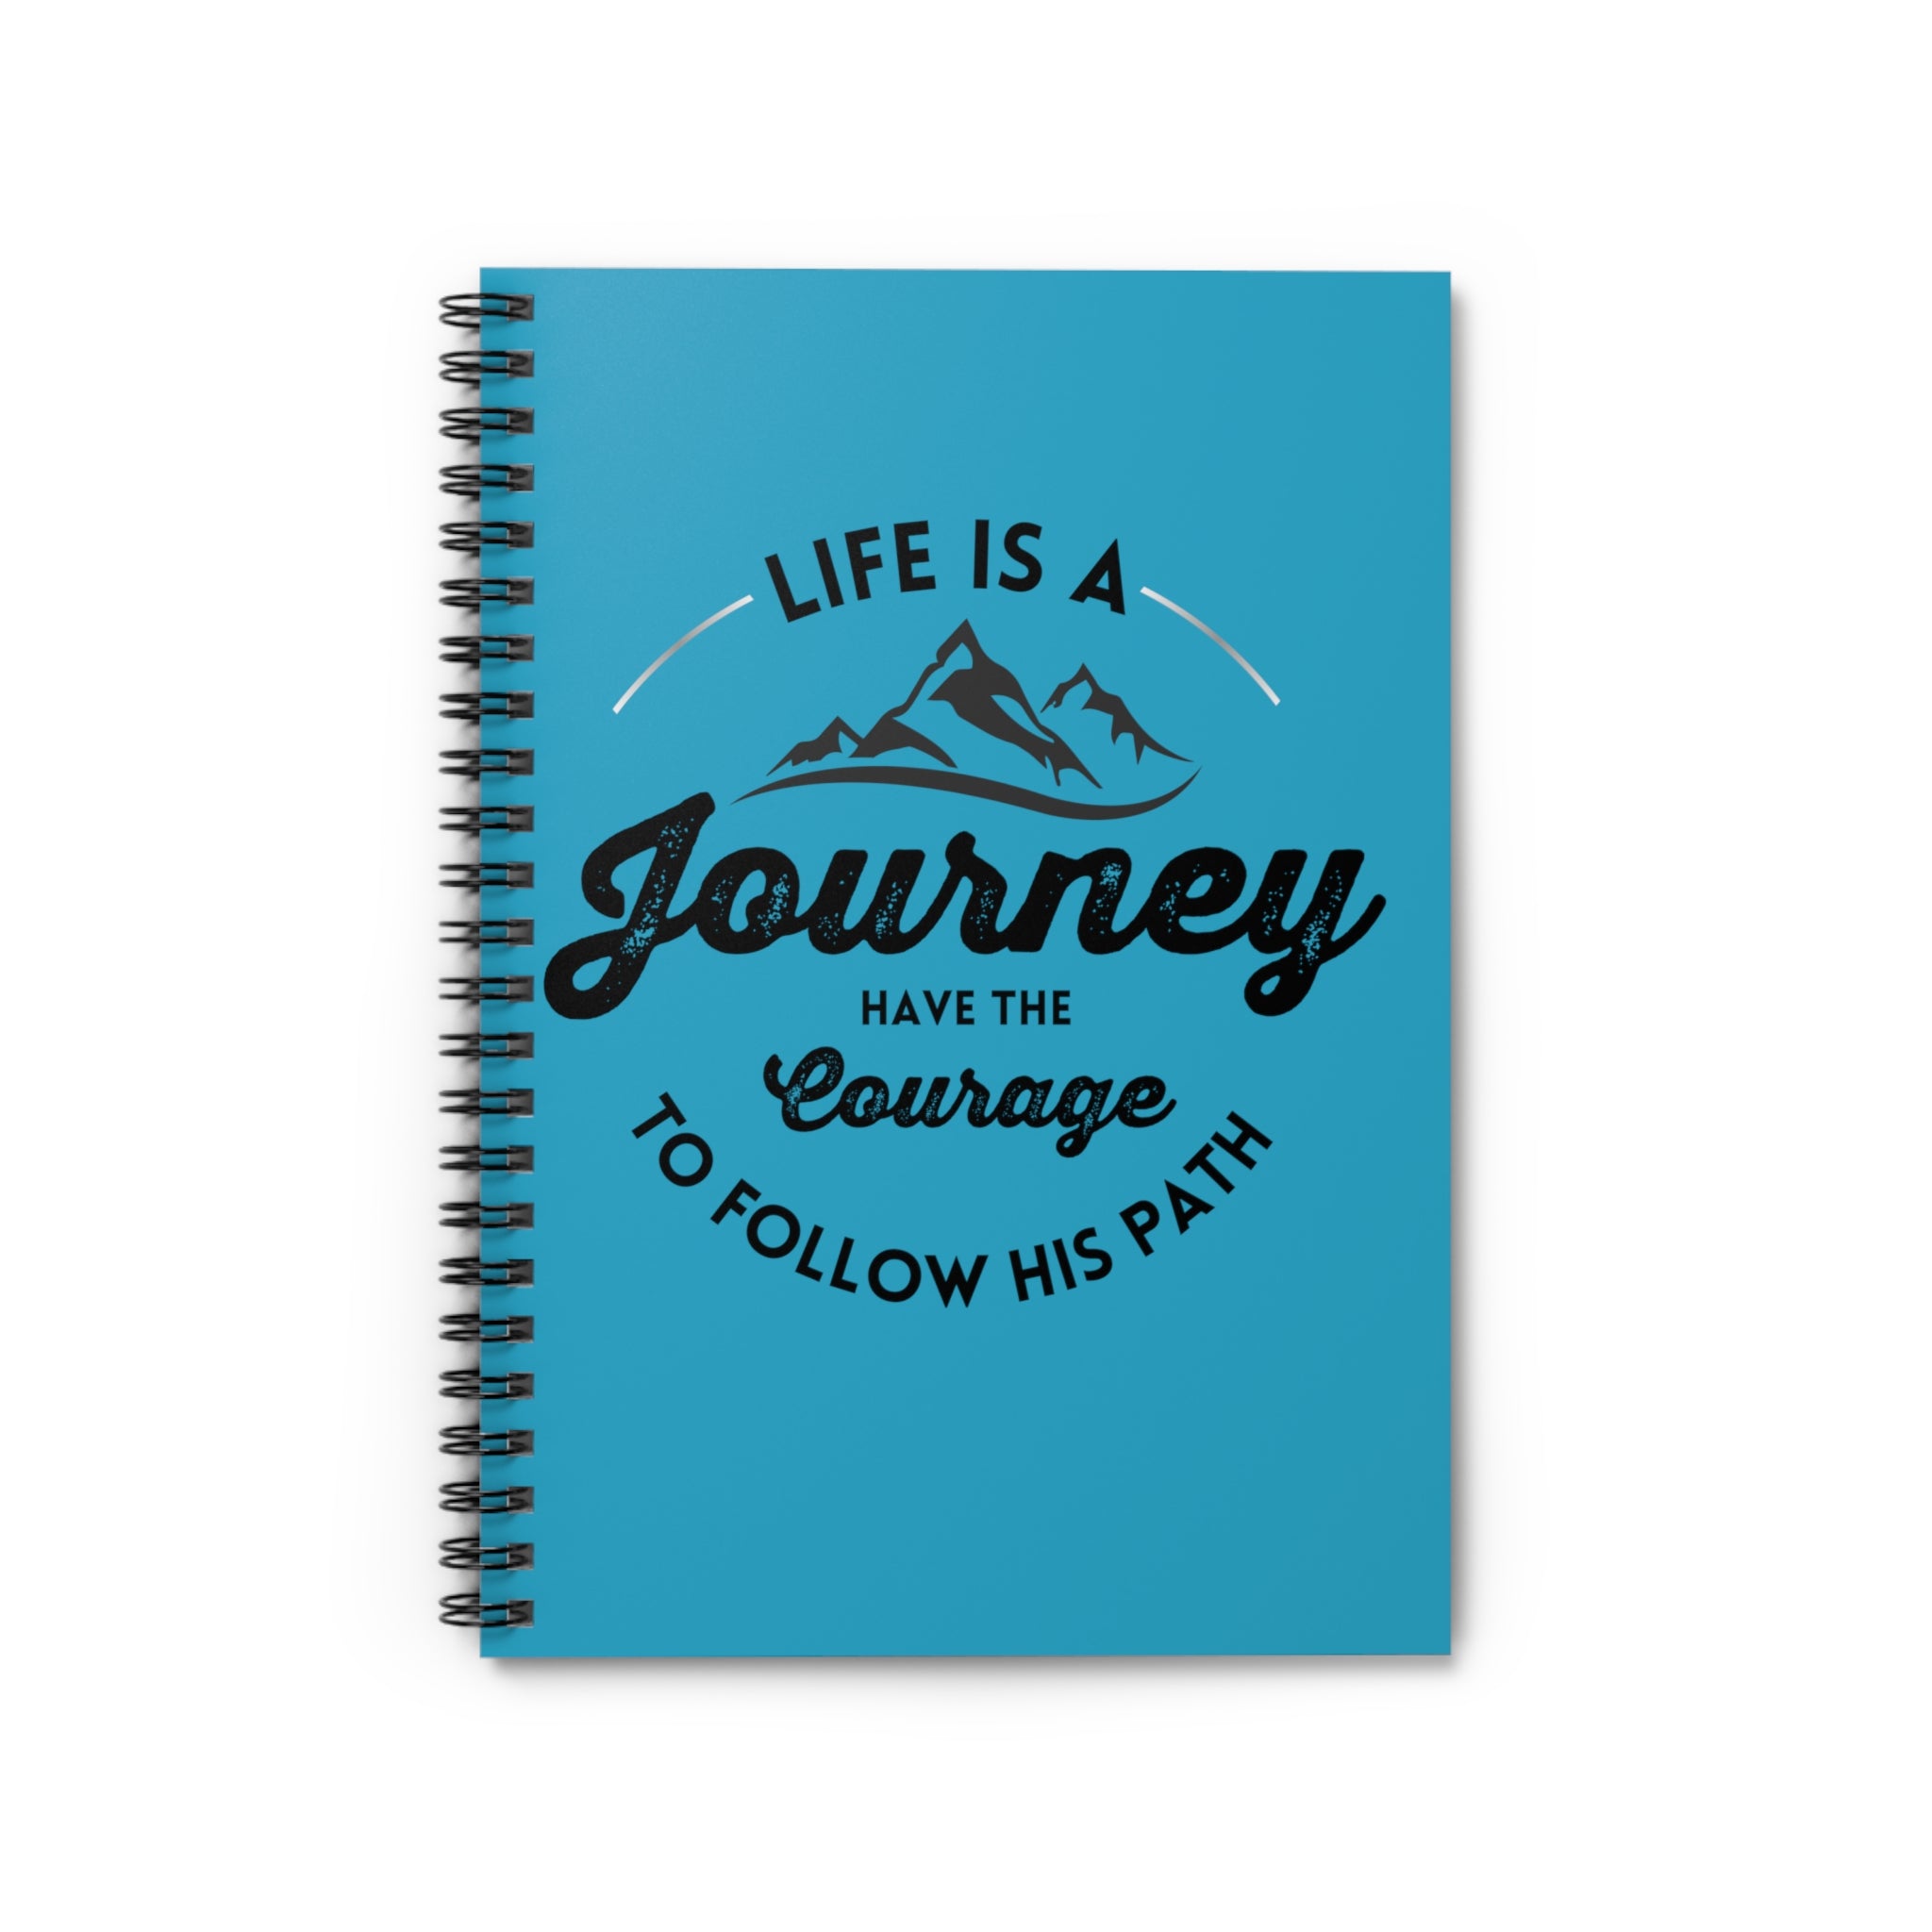 "Journey" Spiral Notebook - Ruled Line